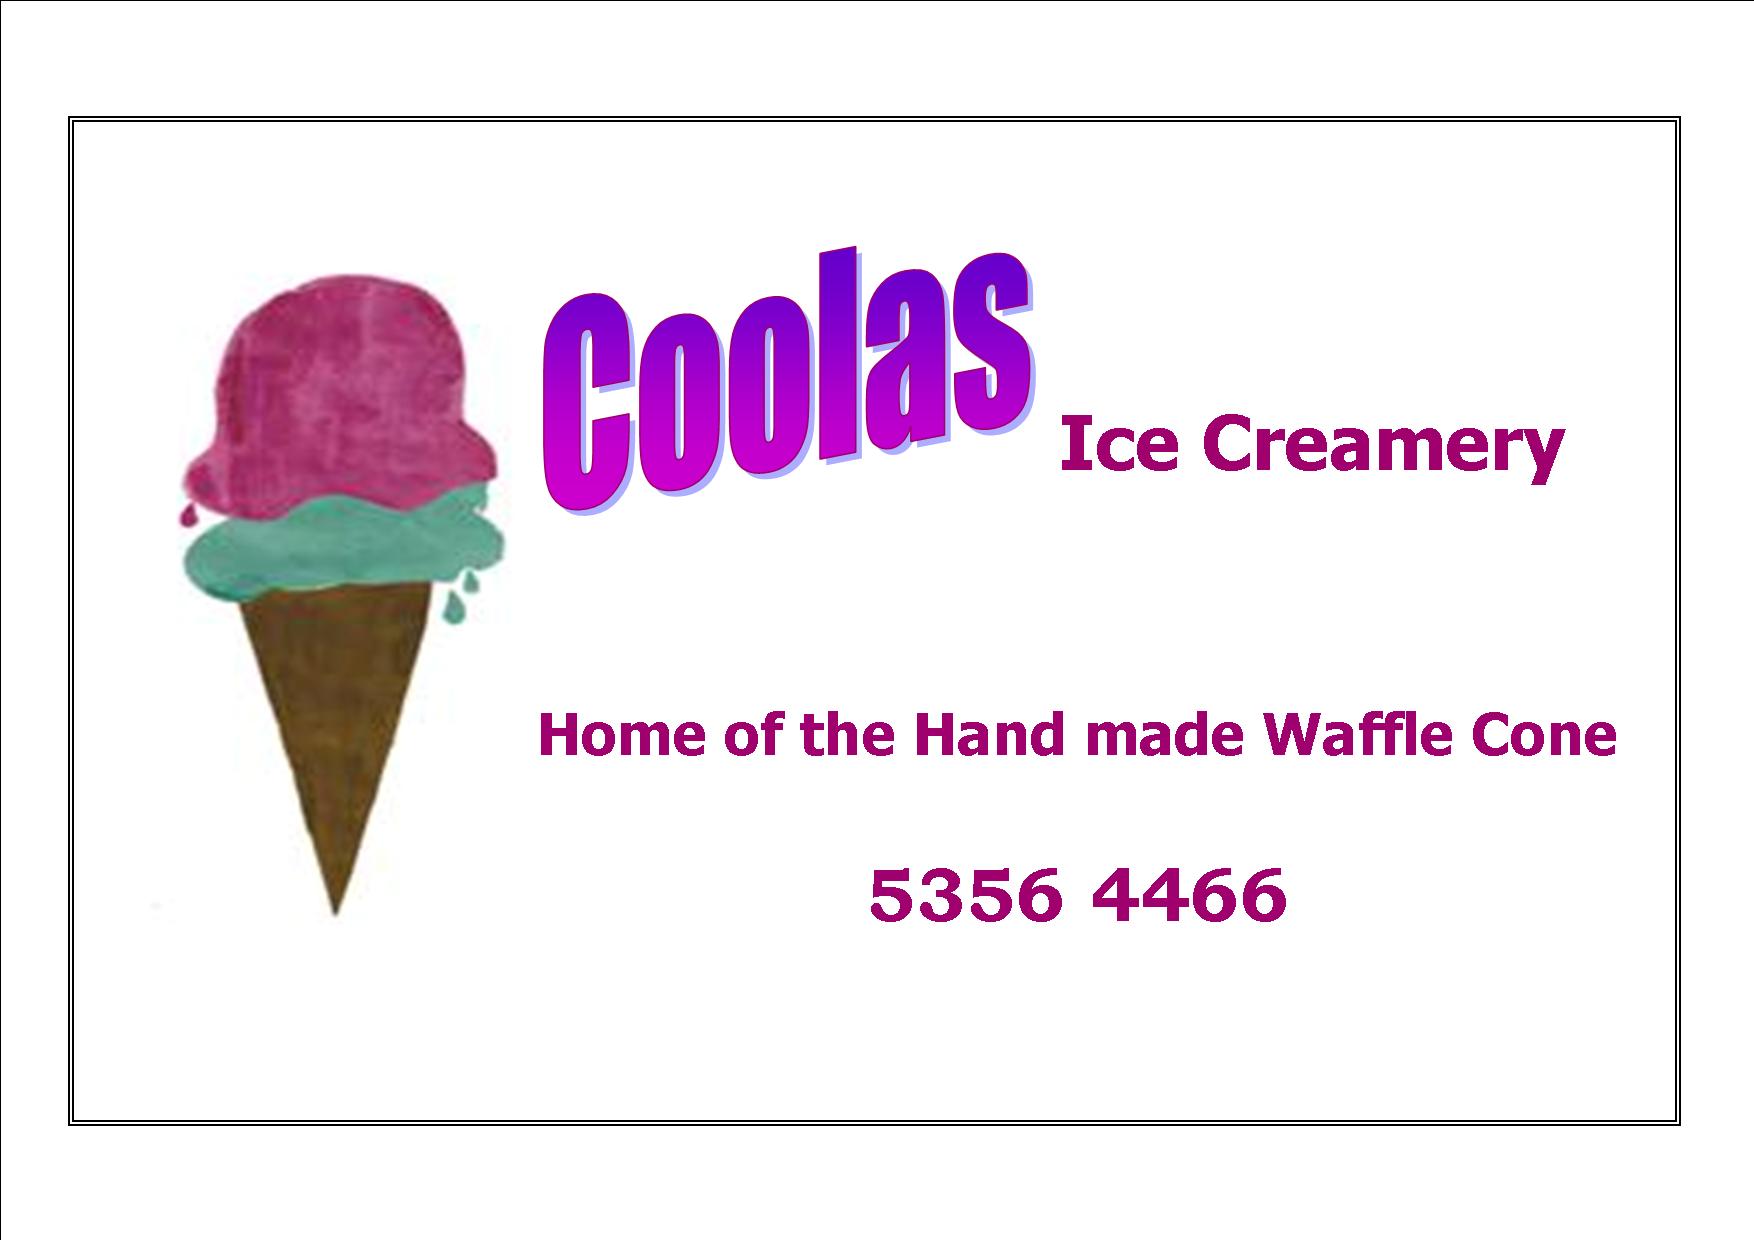 Coolas Ice Creamery in Halls Gap logo